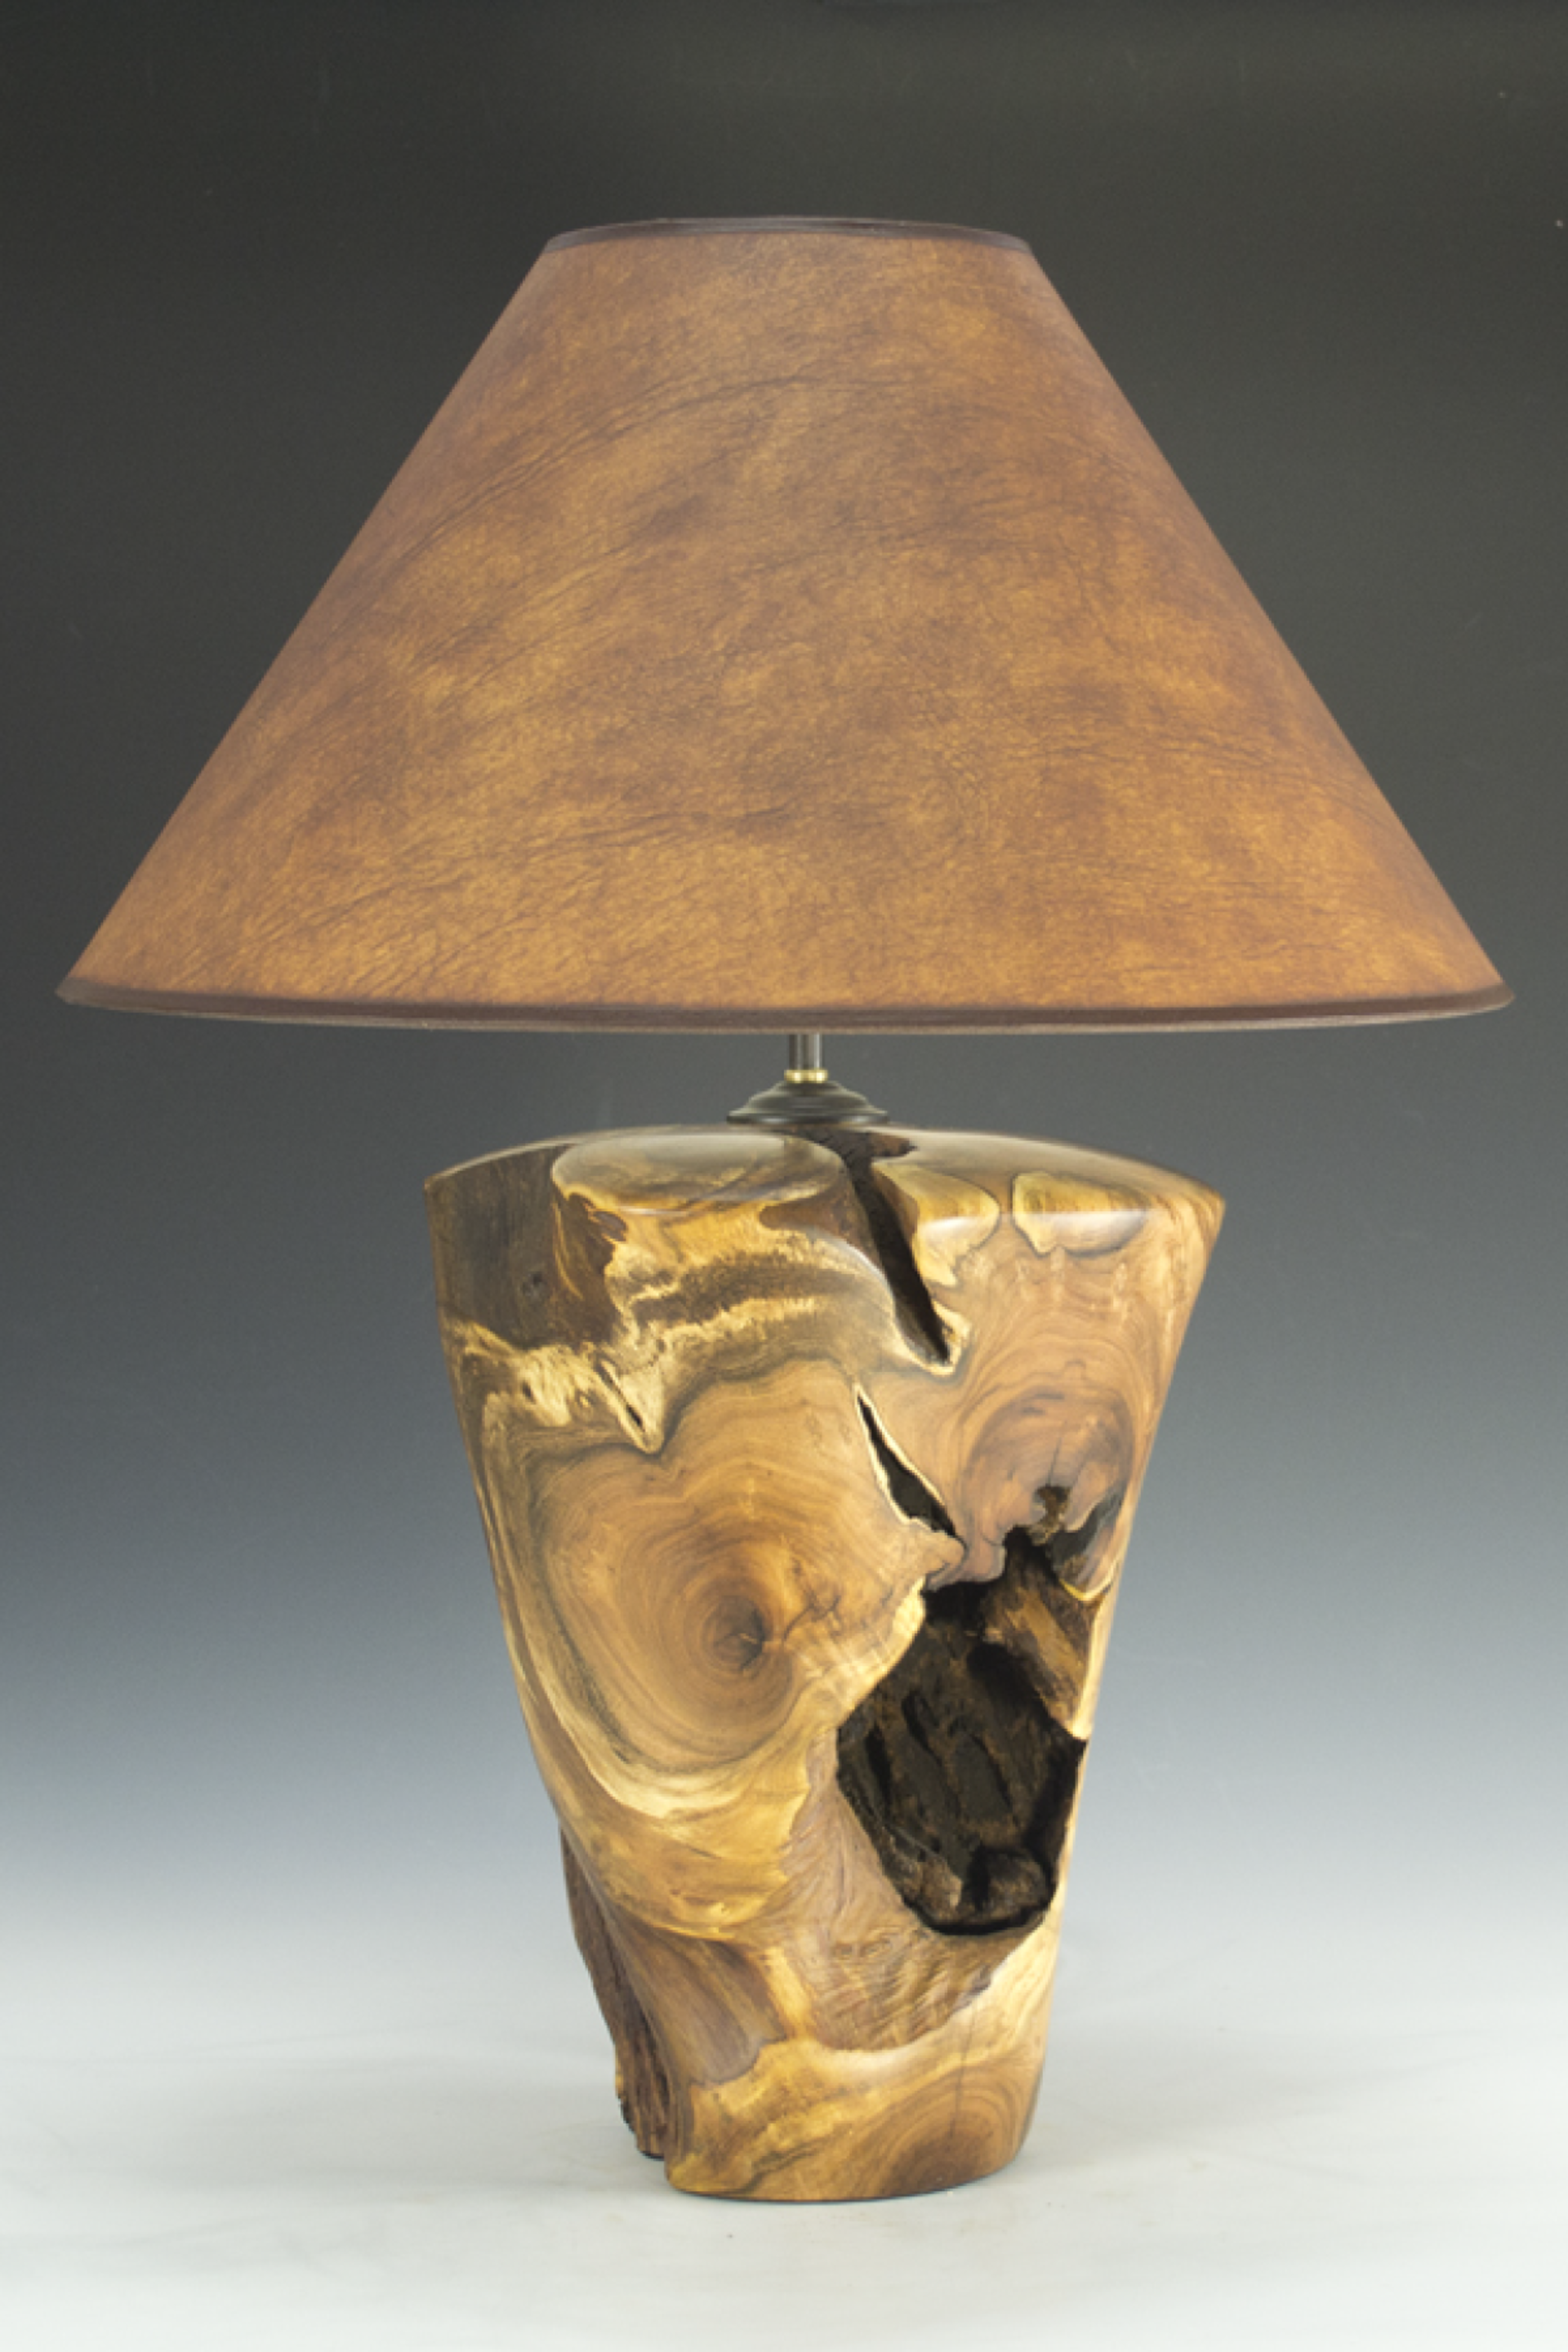 Medium Mesquite Lamp by Chris Eggers